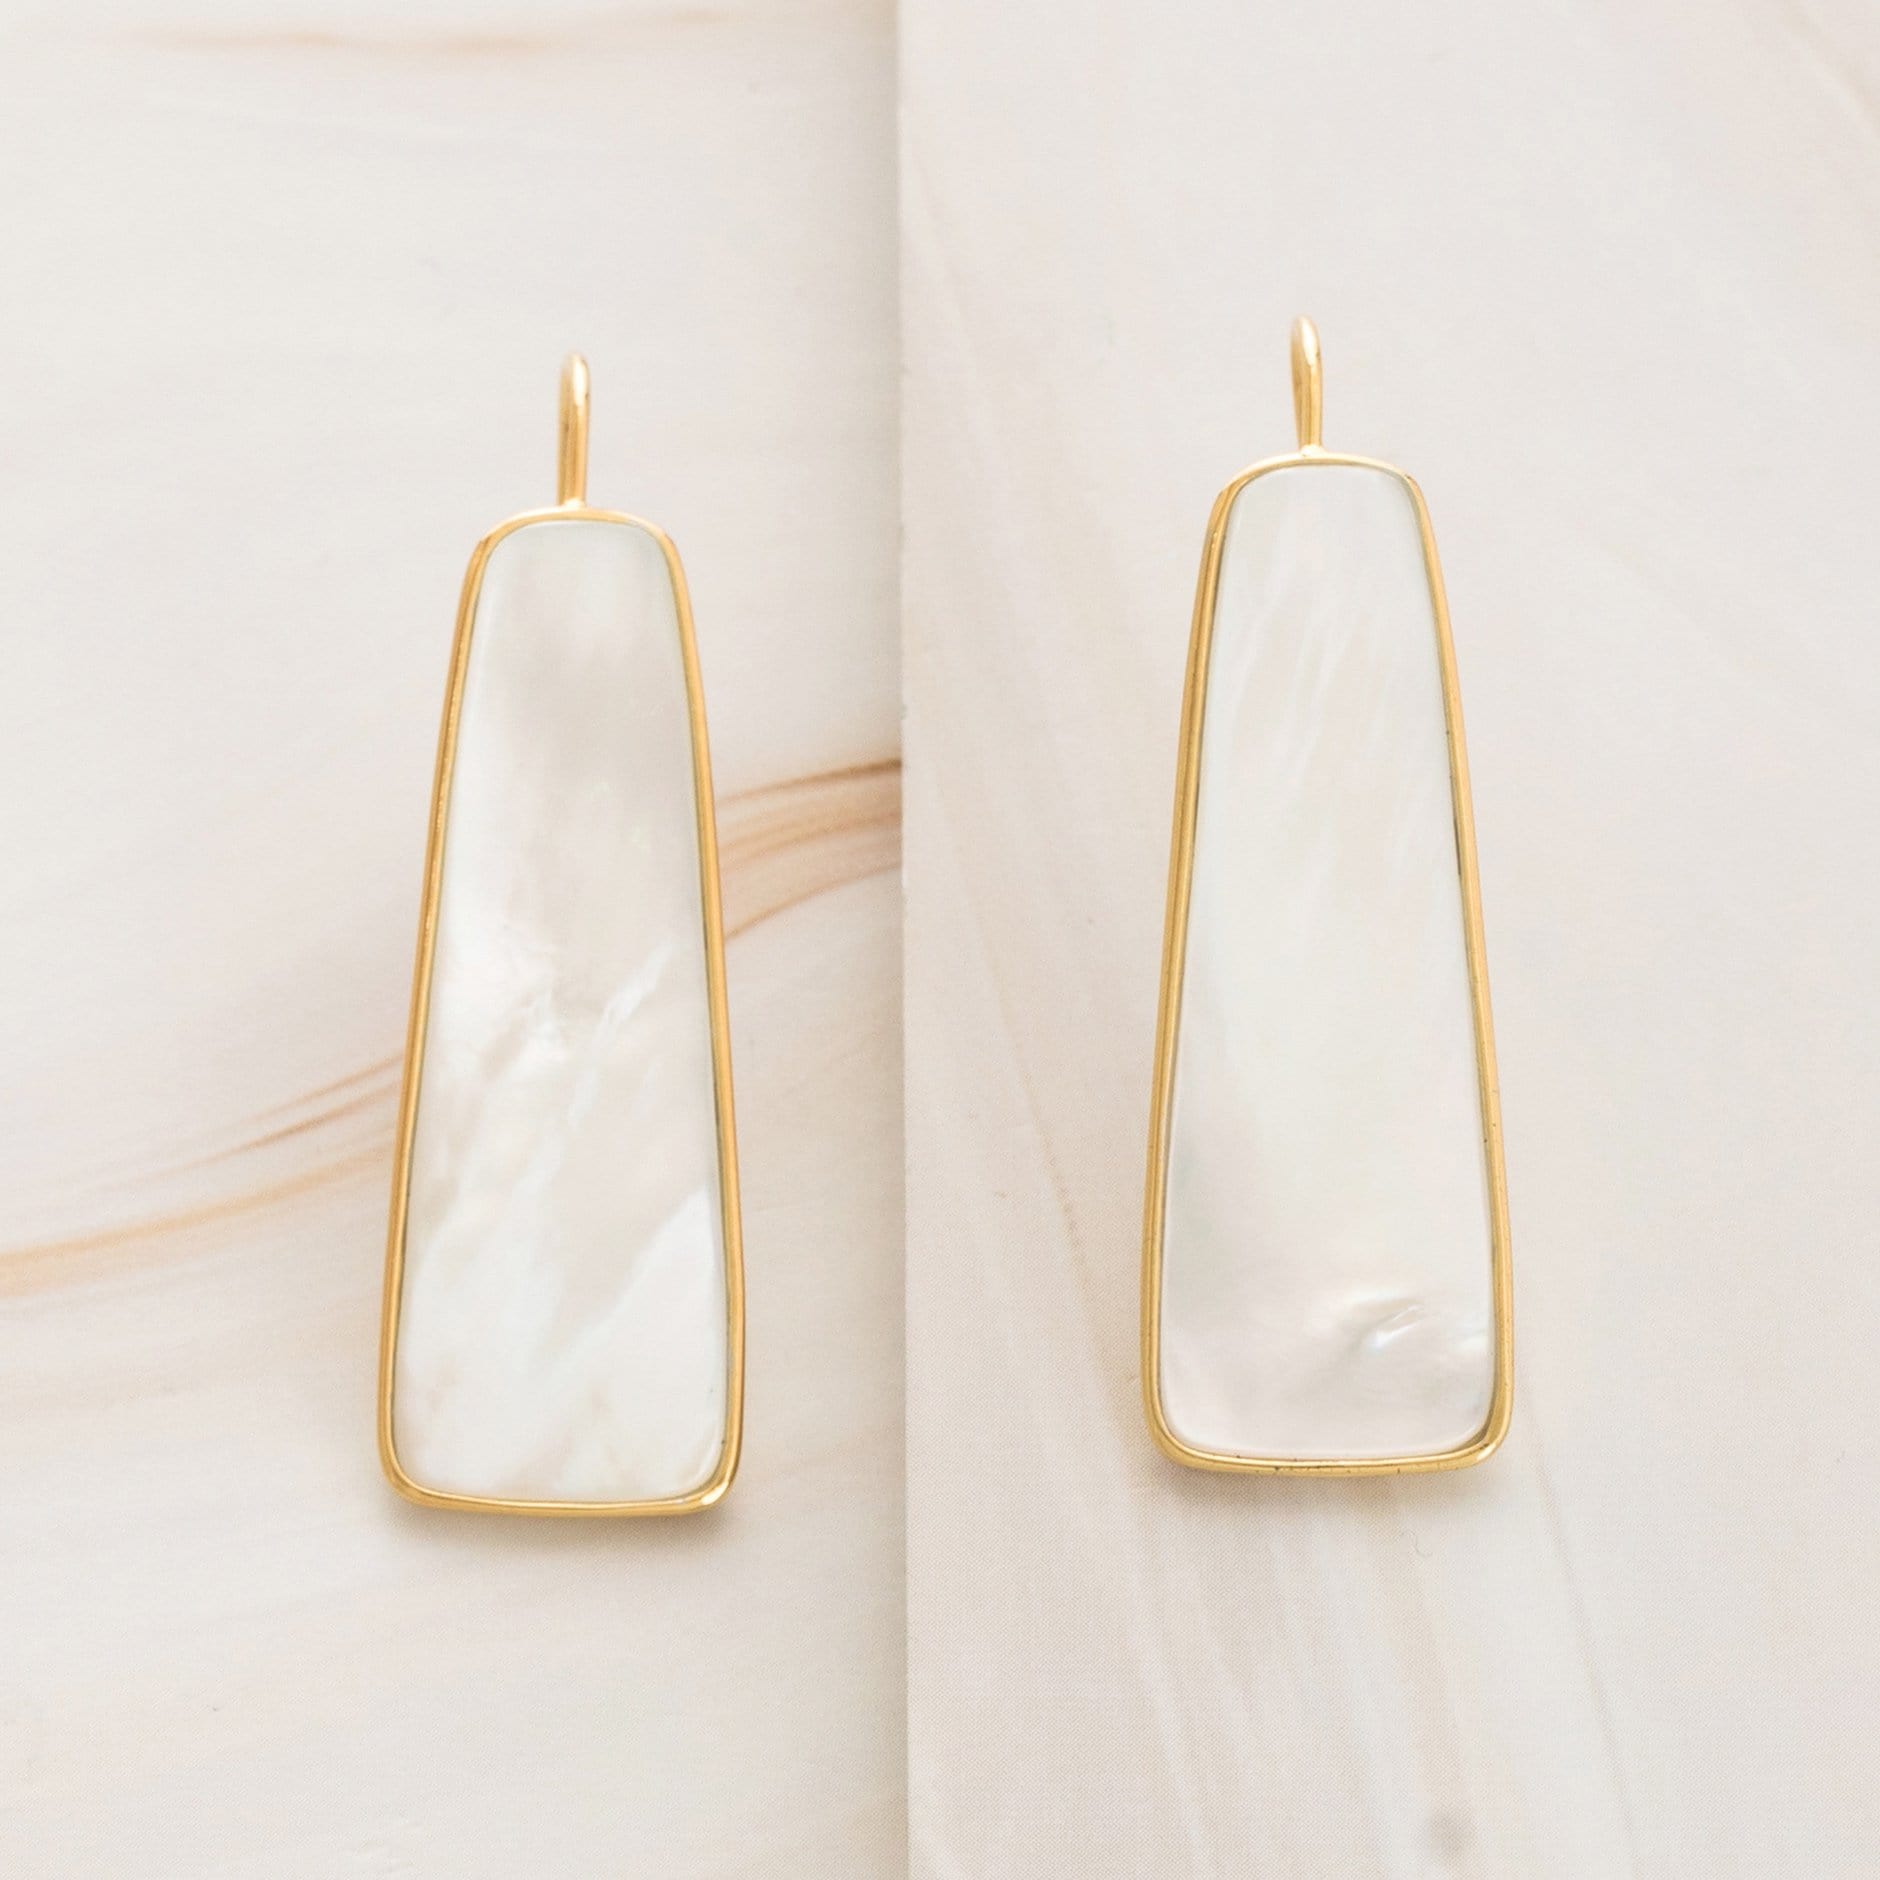 Emblem Jewelry Earrings Gold Tone / White Column Mother-of-Pearl Drop Earrings